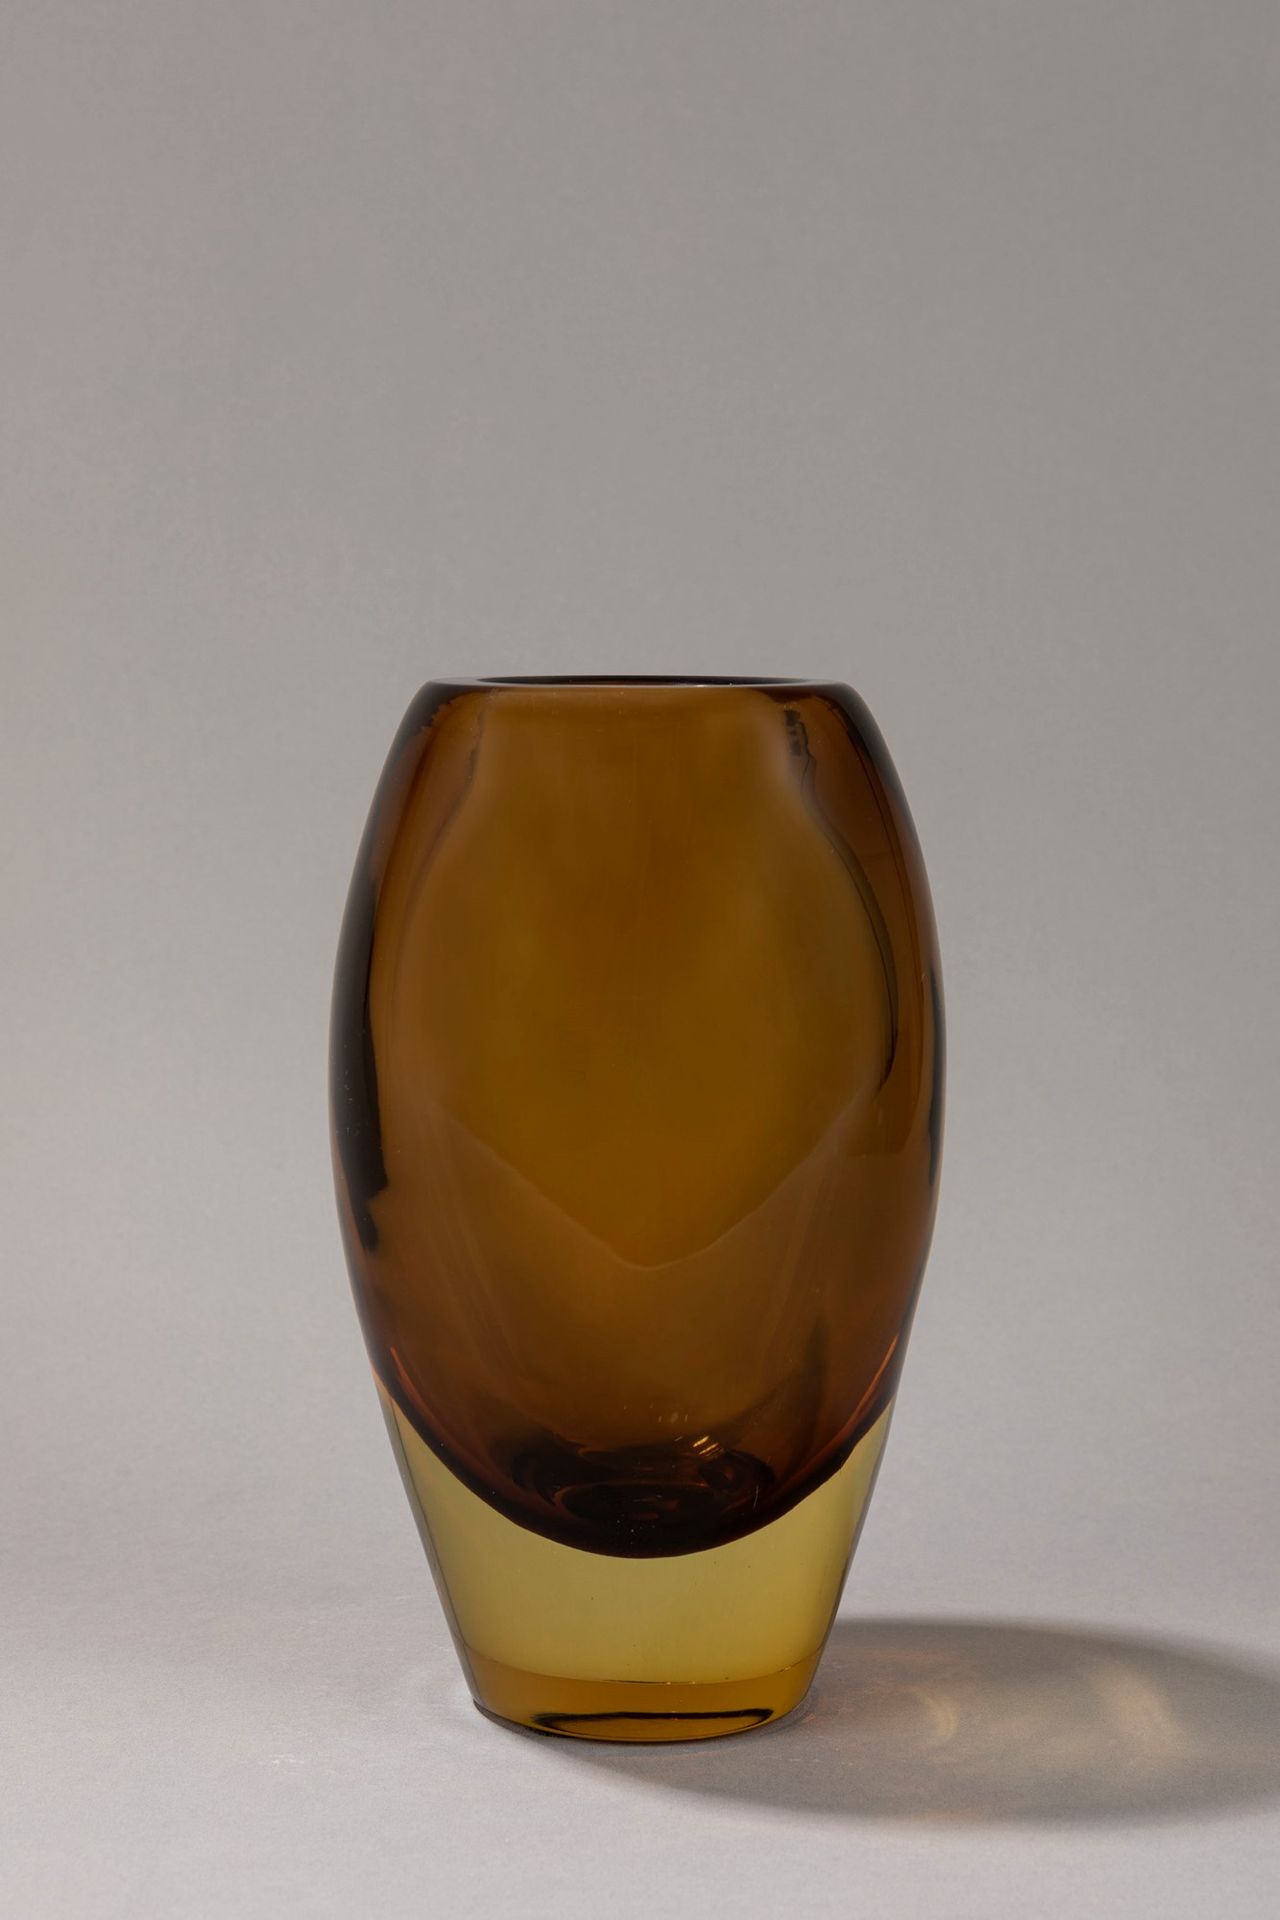 SEGUSO Vase, 1950 ca.

H 27 x diam 11 cm 
sommerso glas